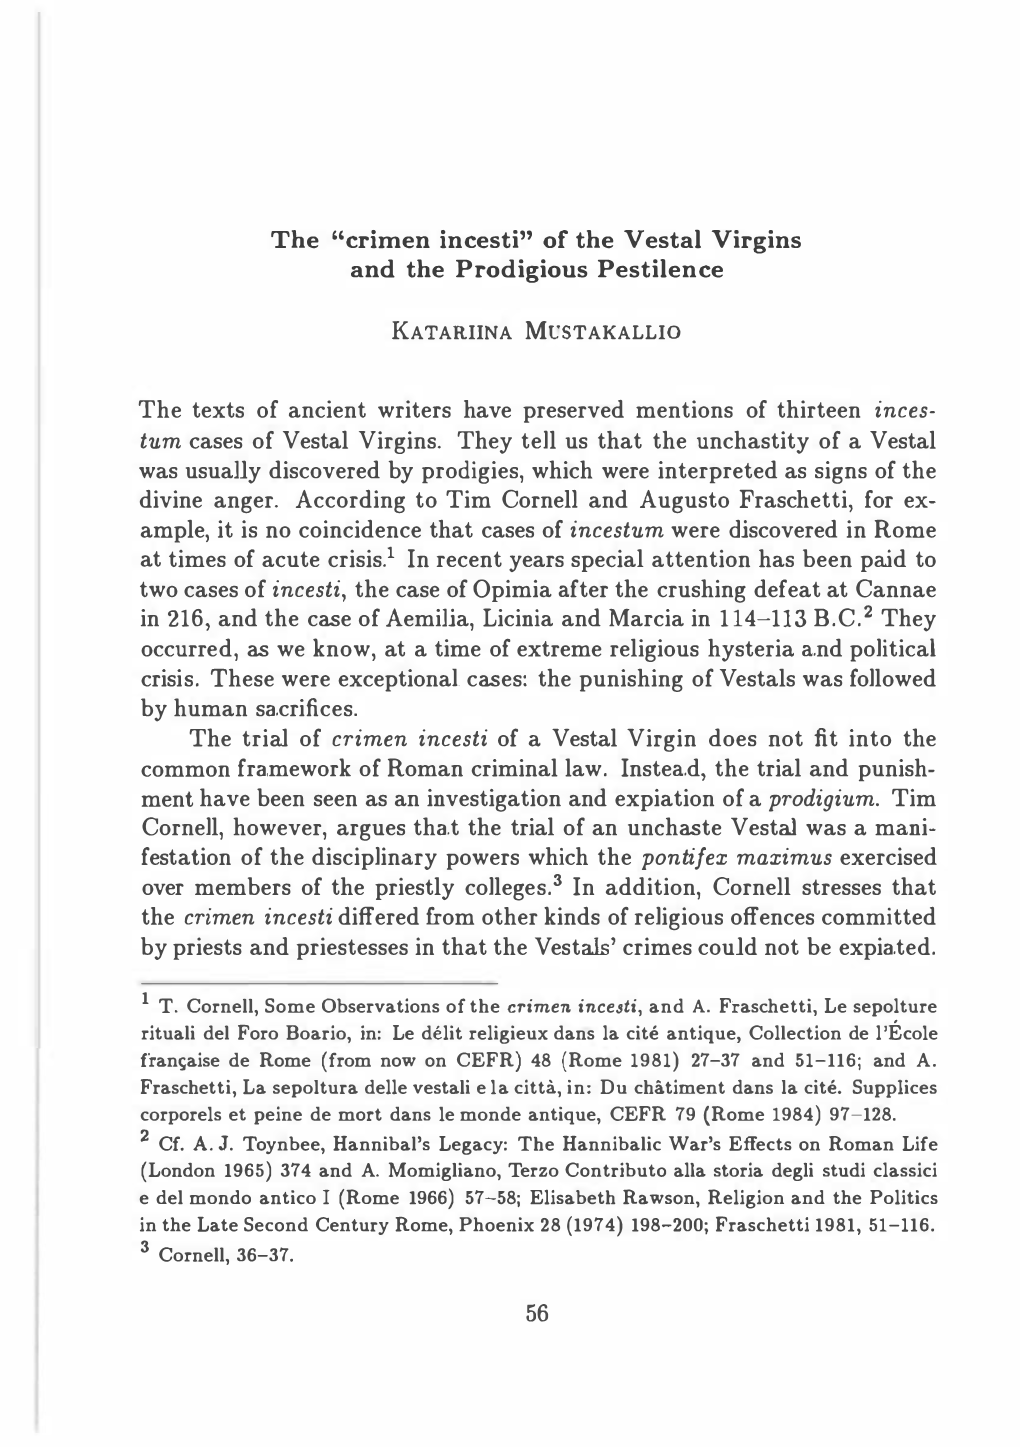 Incesti" of the Vestal Virgins and the Prodigious Pestilence